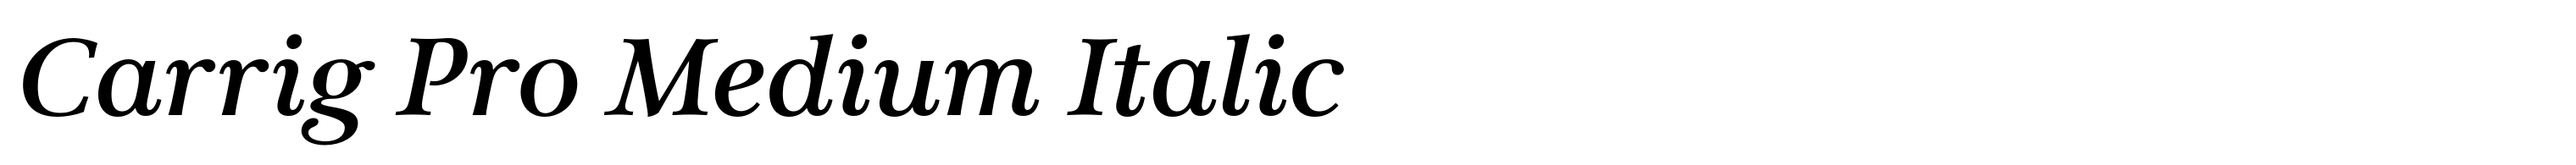 Carrig Pro Medium Italic